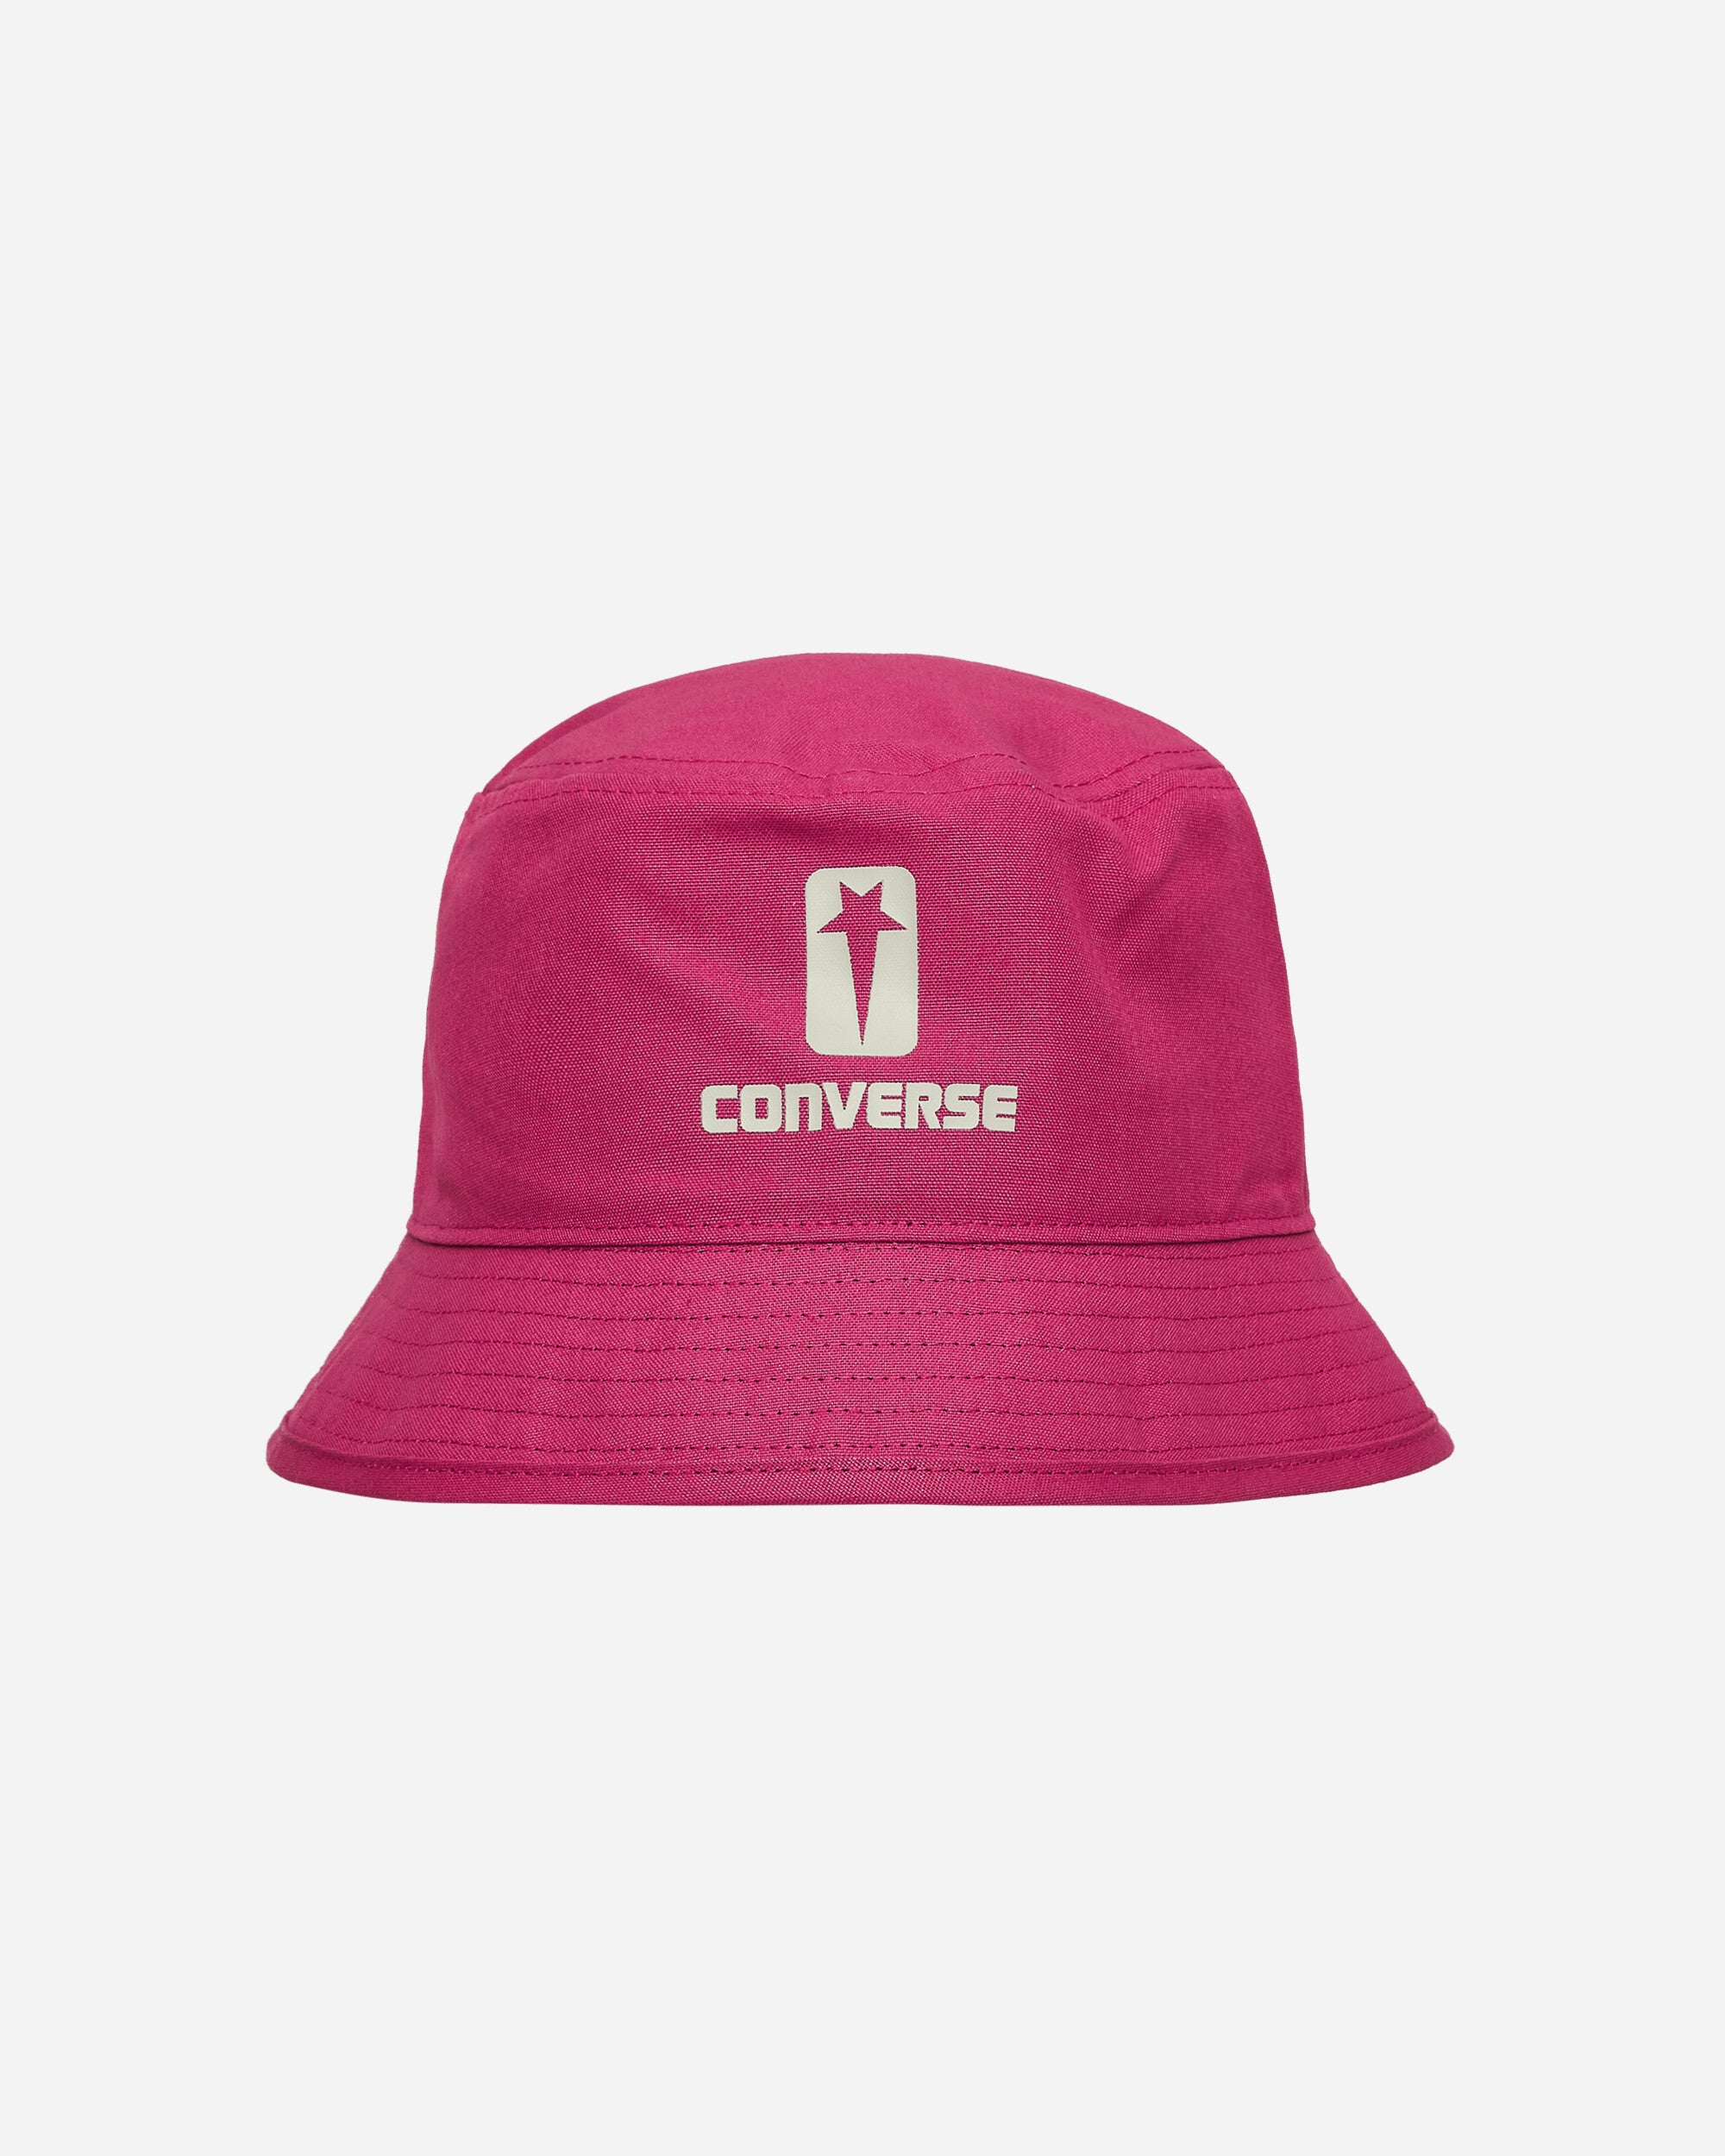 Converse DRKSHDW Bucket Hat Hot Pink - Jam Official Store